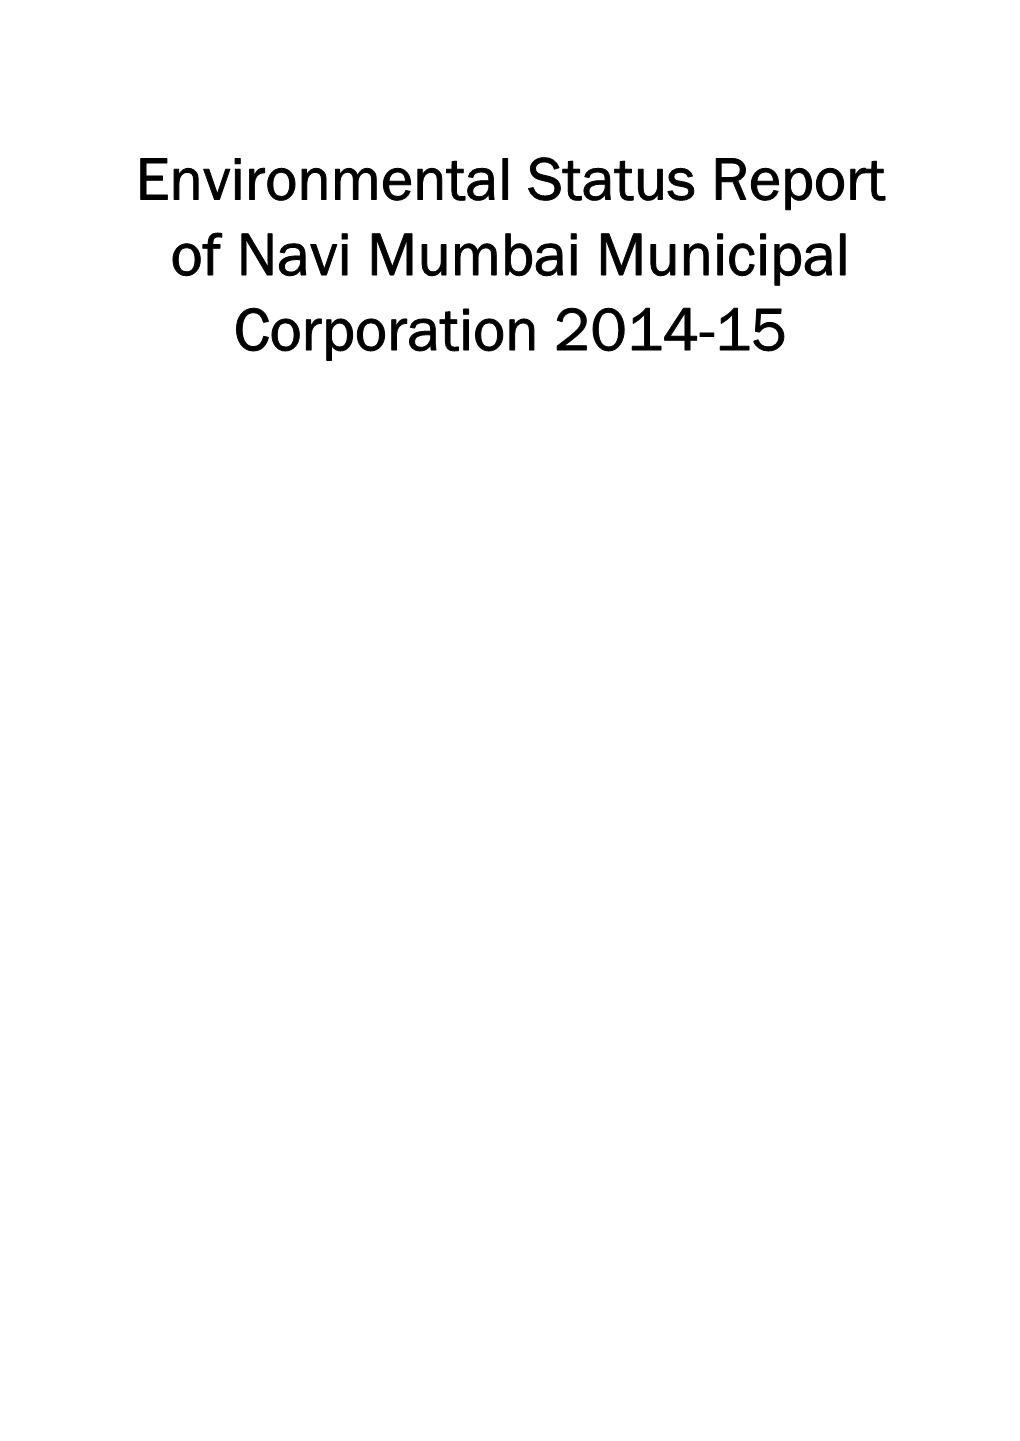 Navi Mumbai Municipal Corporation 2014-15